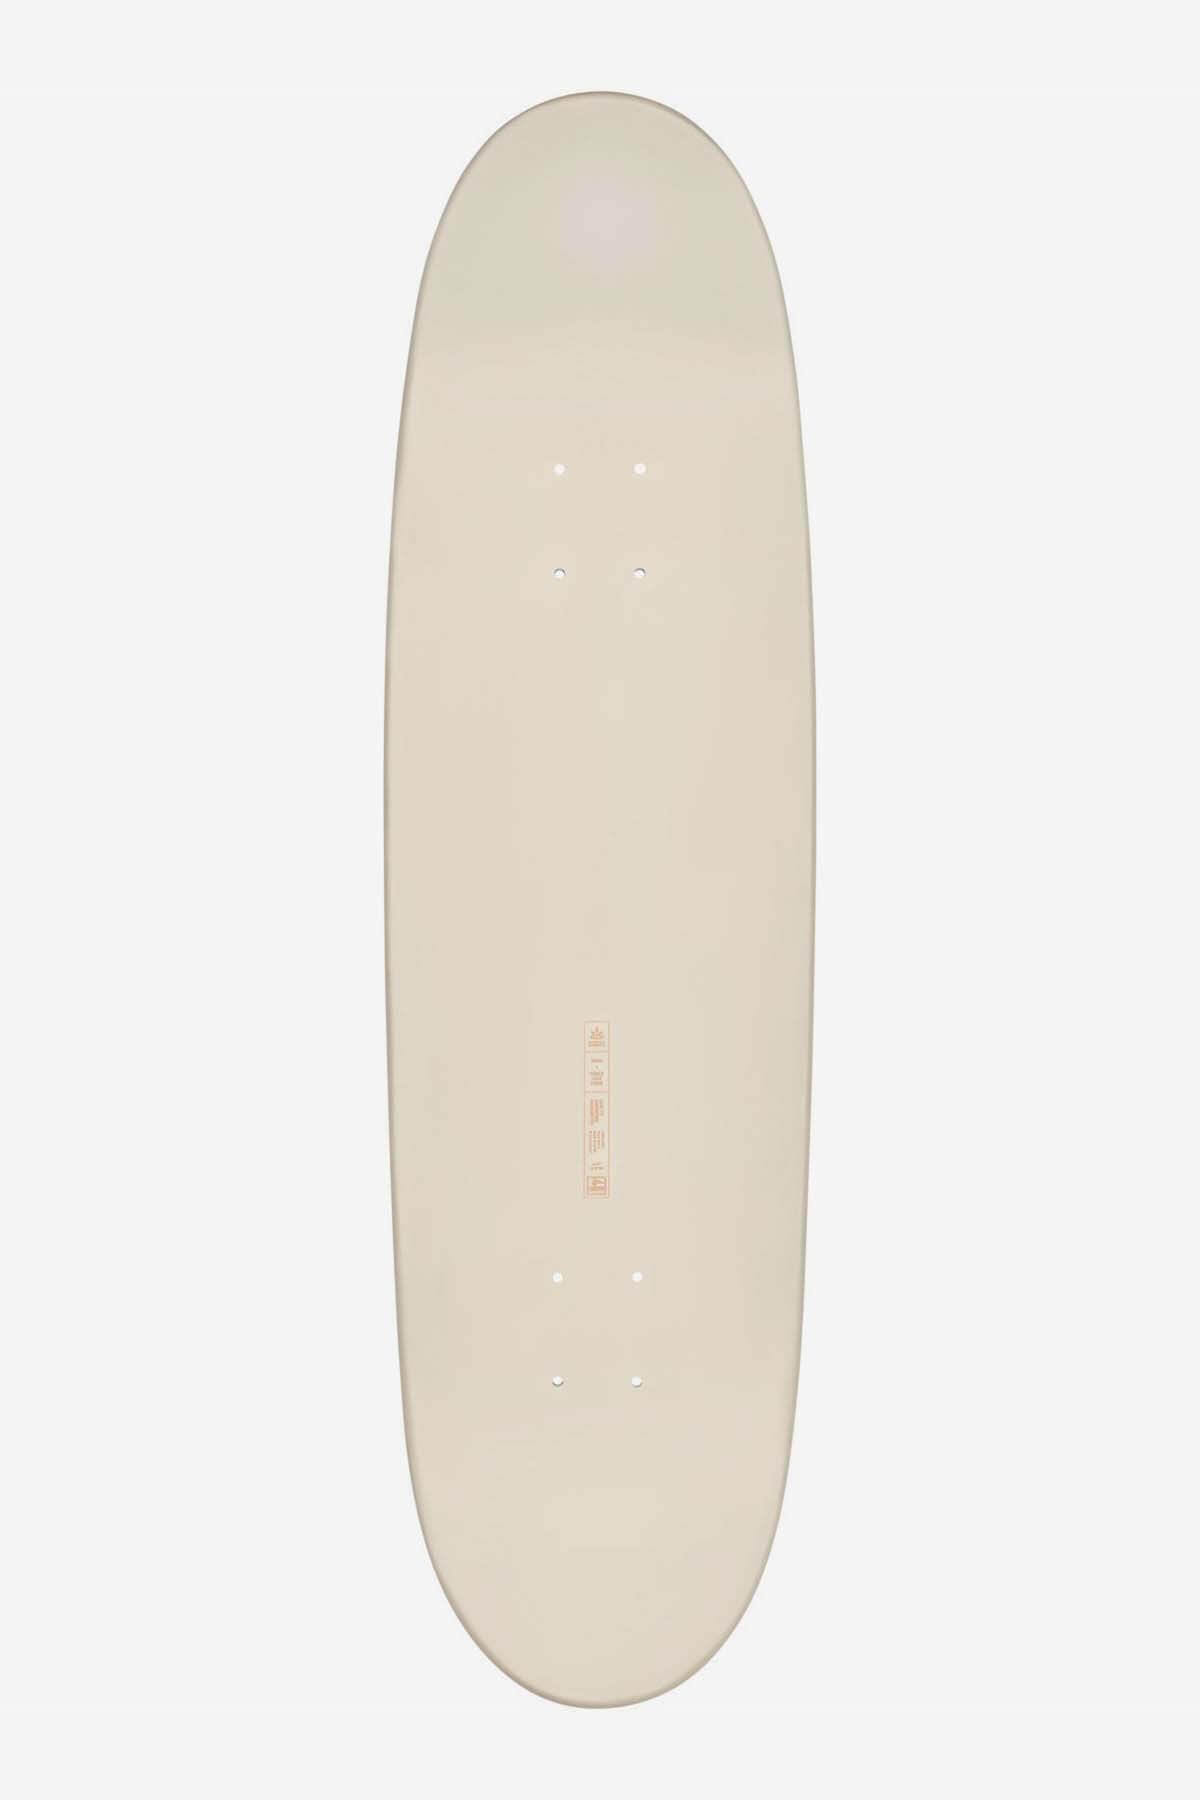 Globe - Eggy - Off-White/The Lot - 8.625" Skateboard Deck